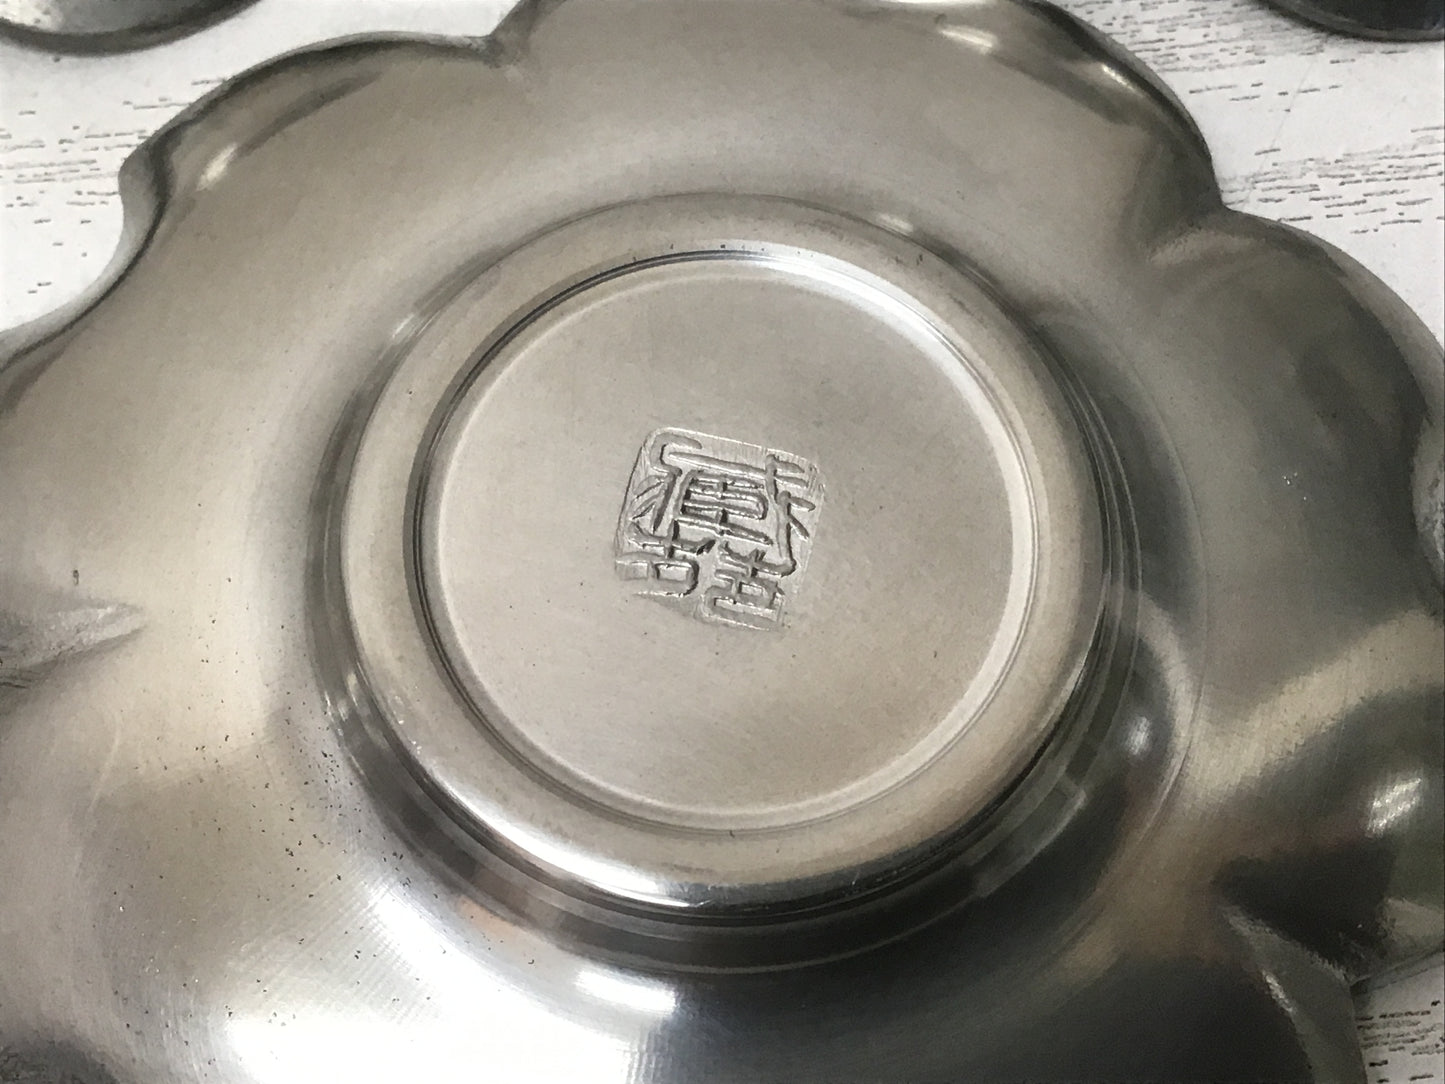 Y2072 DISH Tin Chataku Saucer Teacup Holder signed box  Zouen Japanese antique